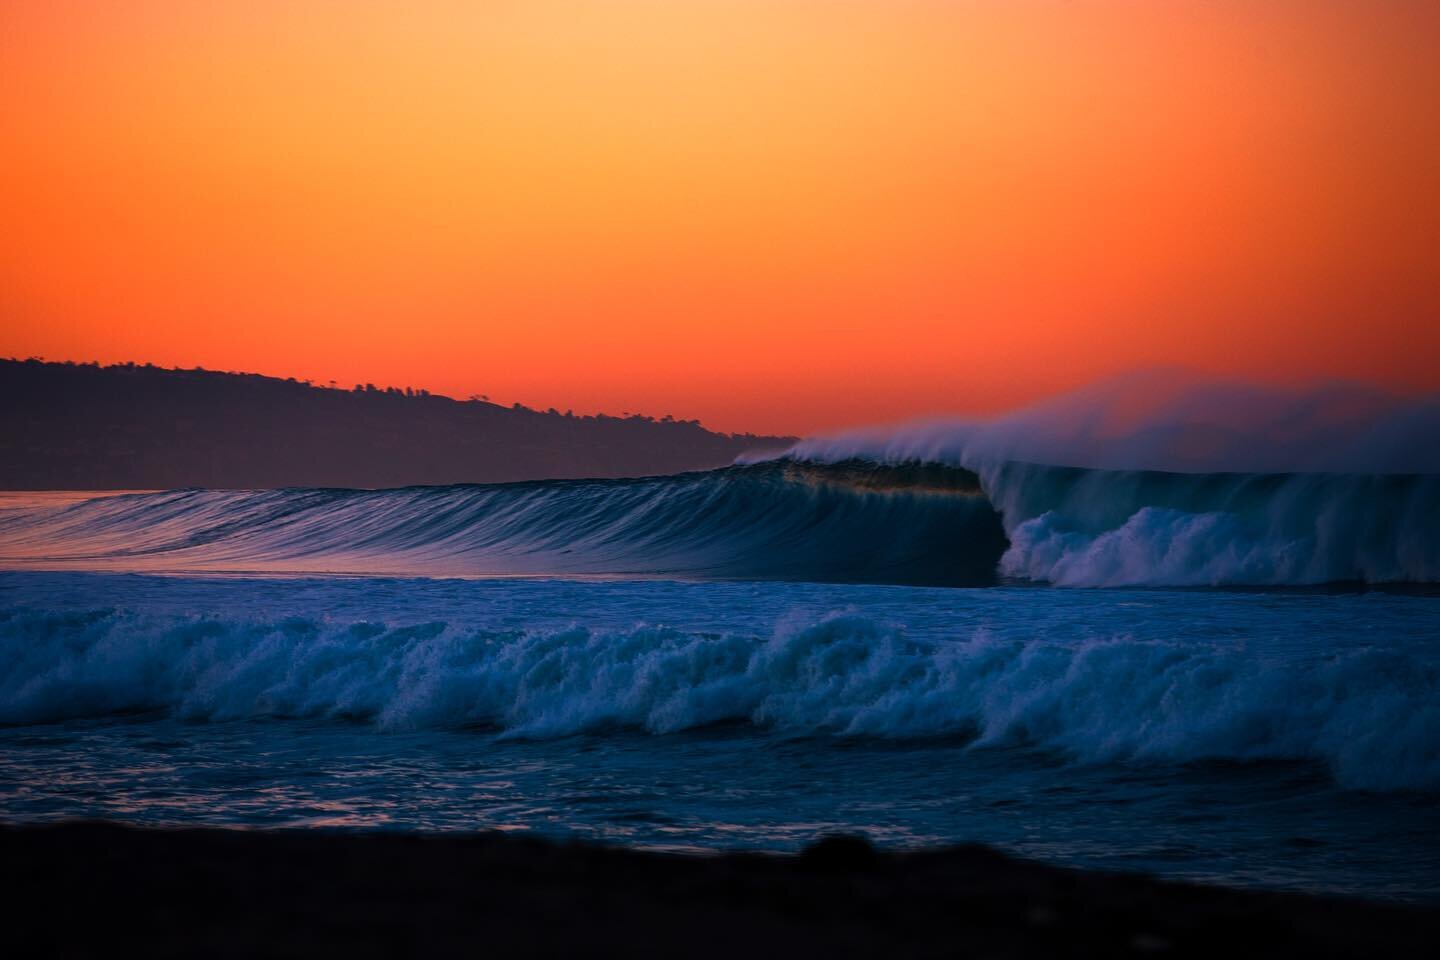 Tangerine dreams
&bull;
&bull;
&bull;
#dawn #california #southbay #firstlight #dawnpatrol #sunrise #swell #surf #ocean #waves #surfculture #nvsurf #waterphotographer #wavephotography #surfphotography #cinematographer #directorofphotography #dop #surf